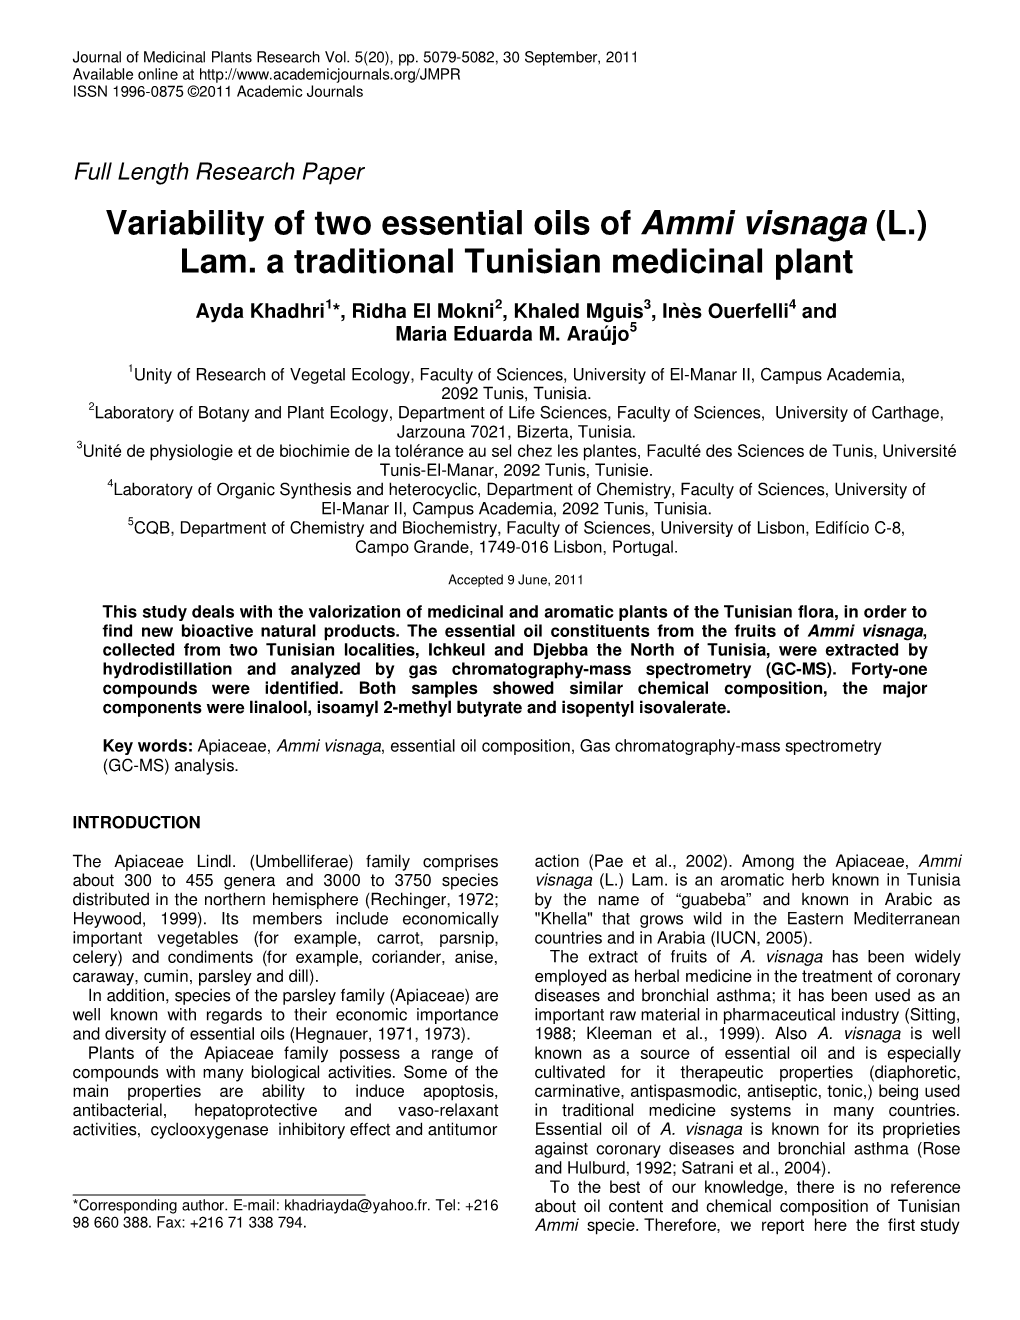 Variability of Two Essential Oils of Ammi Visnaga (L.) Lam